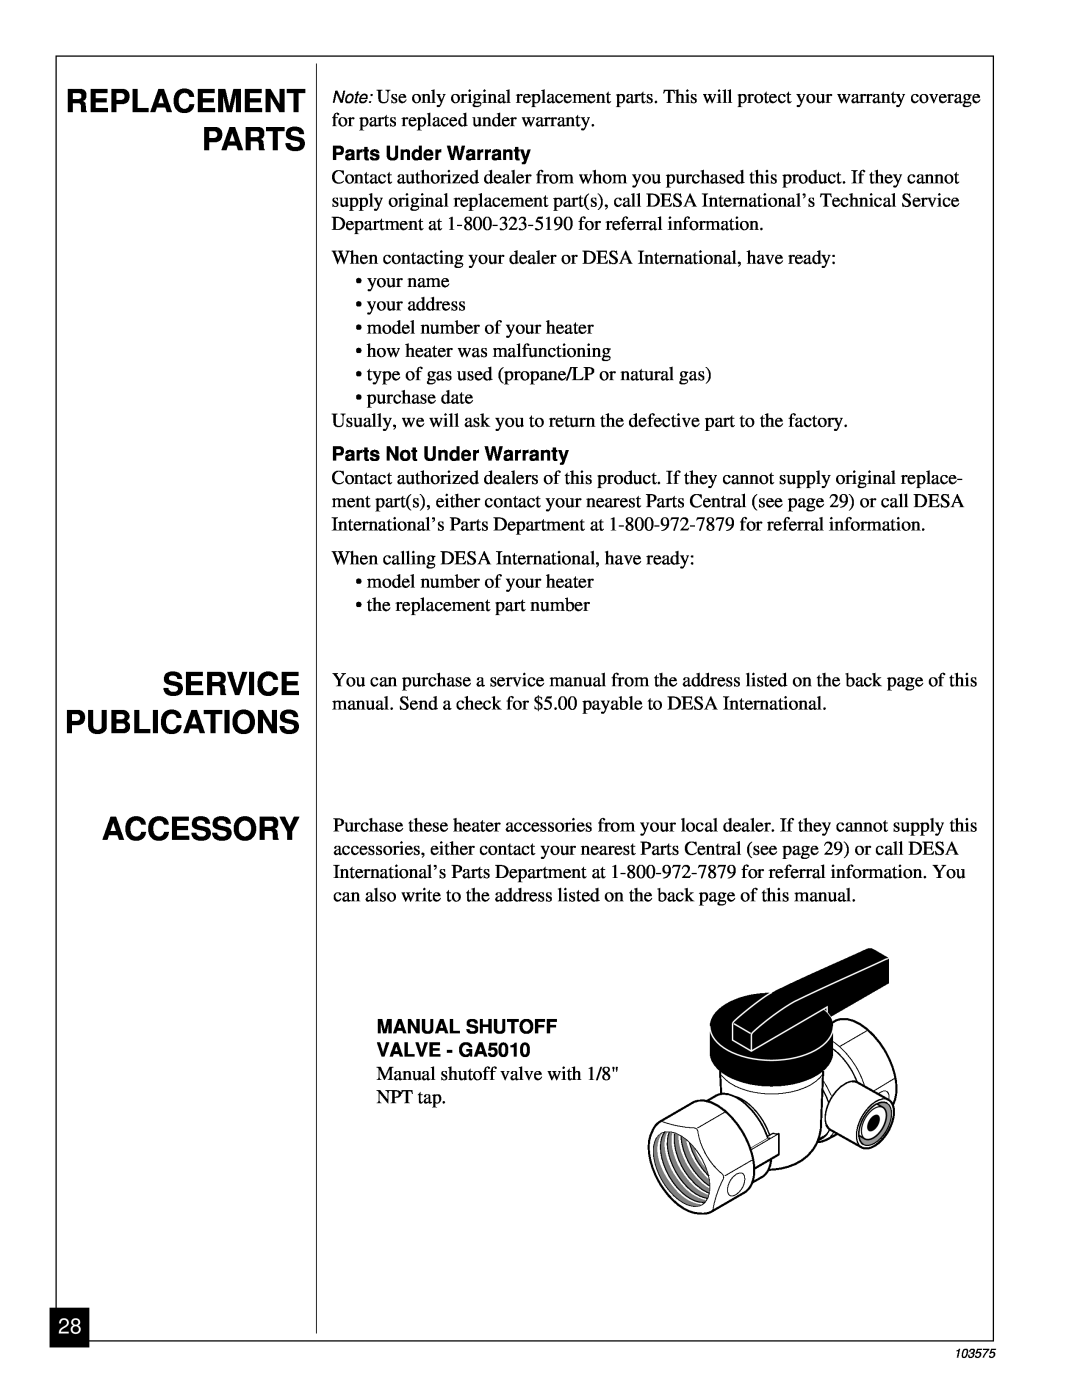 Desa CGP10TL Replacement Parts Service Publications Accessory, Parts Under Warranty, Parts Not Under Warranty 